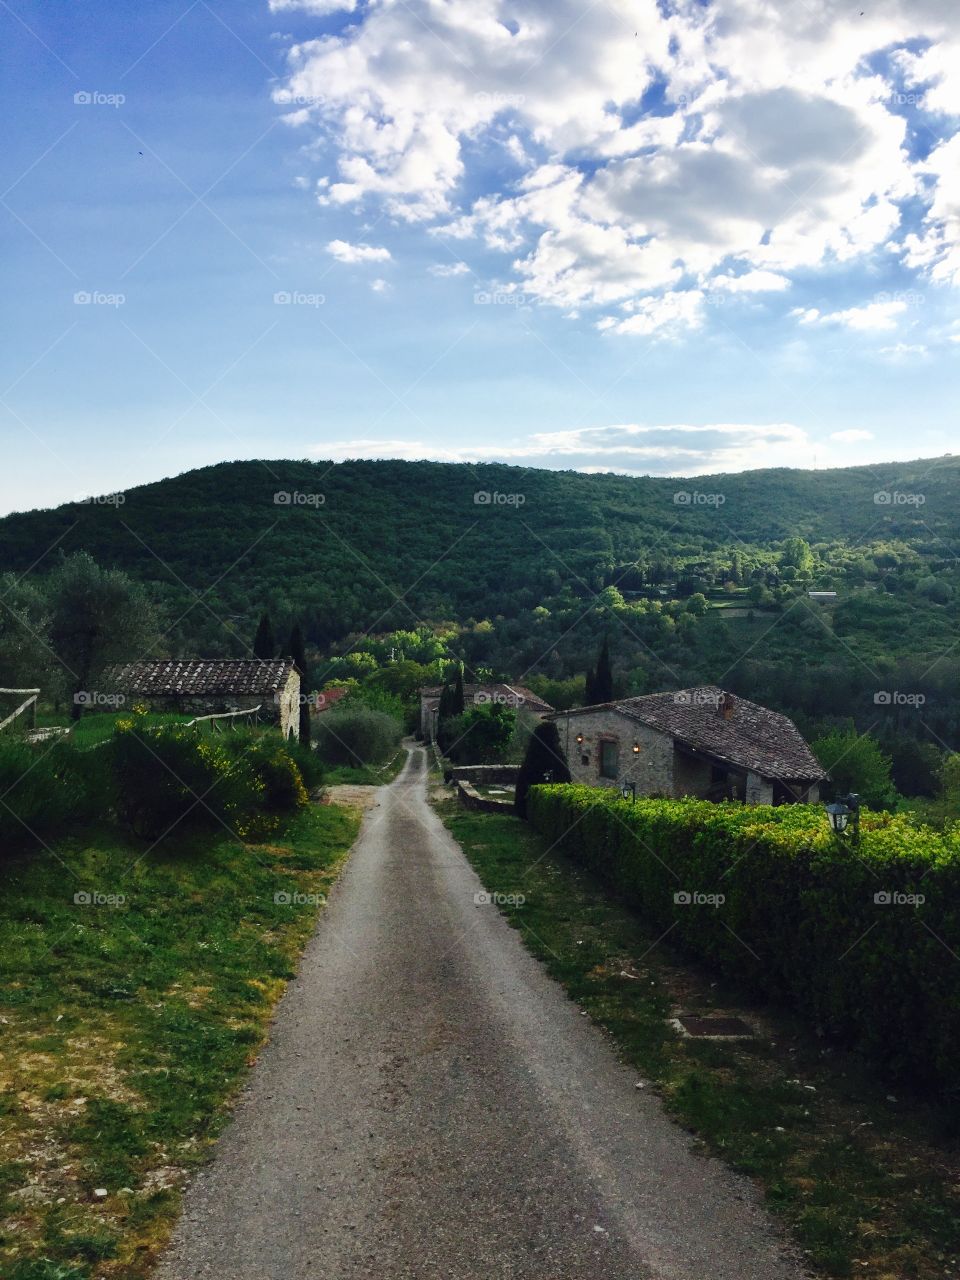 A road in Tuscany - Italy